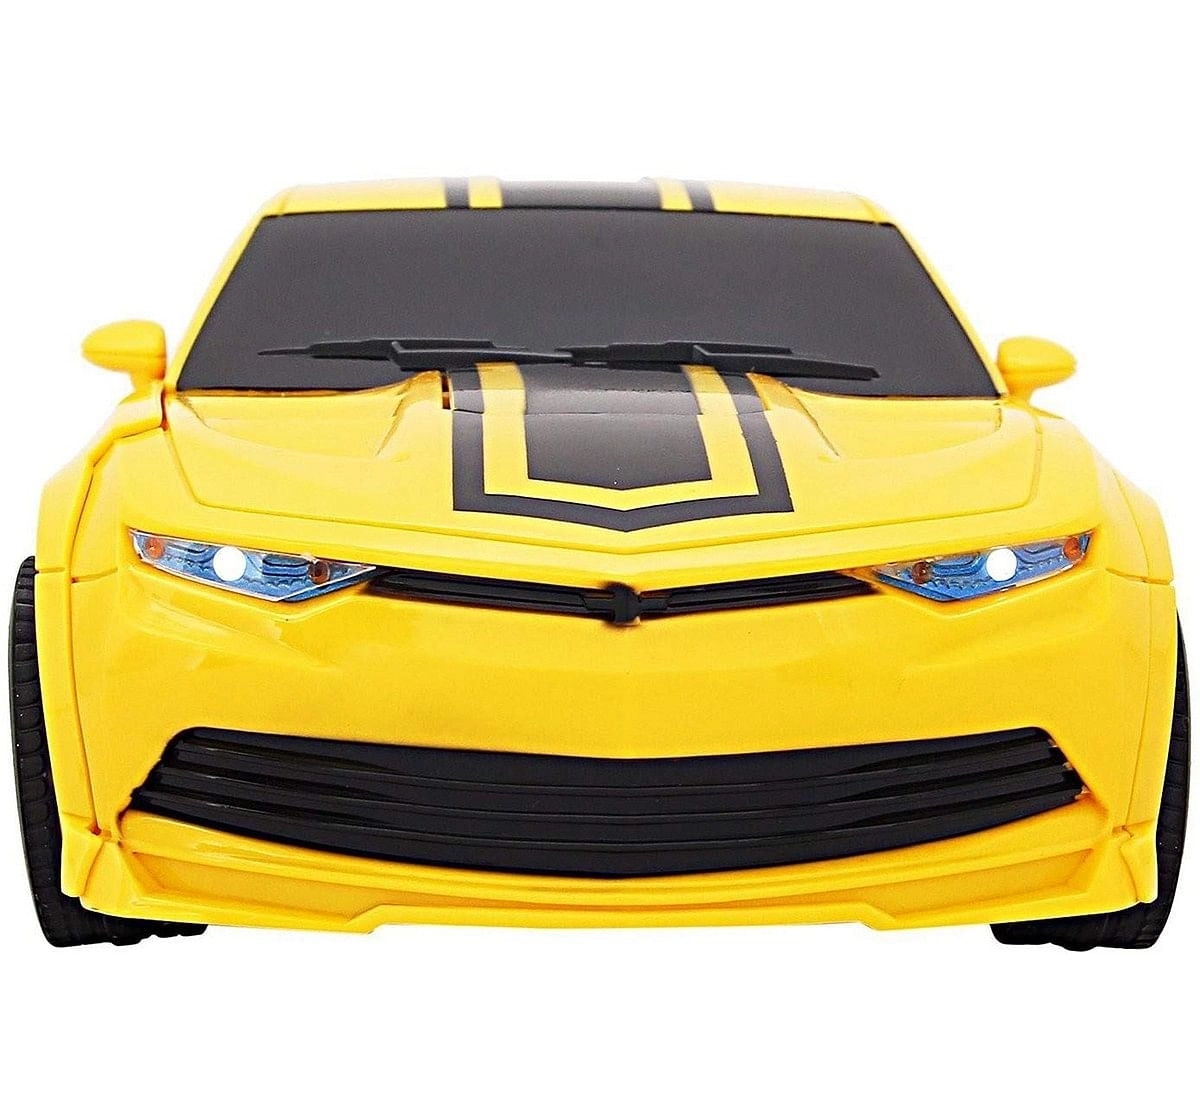 Turbos Transforming City Car Yellow